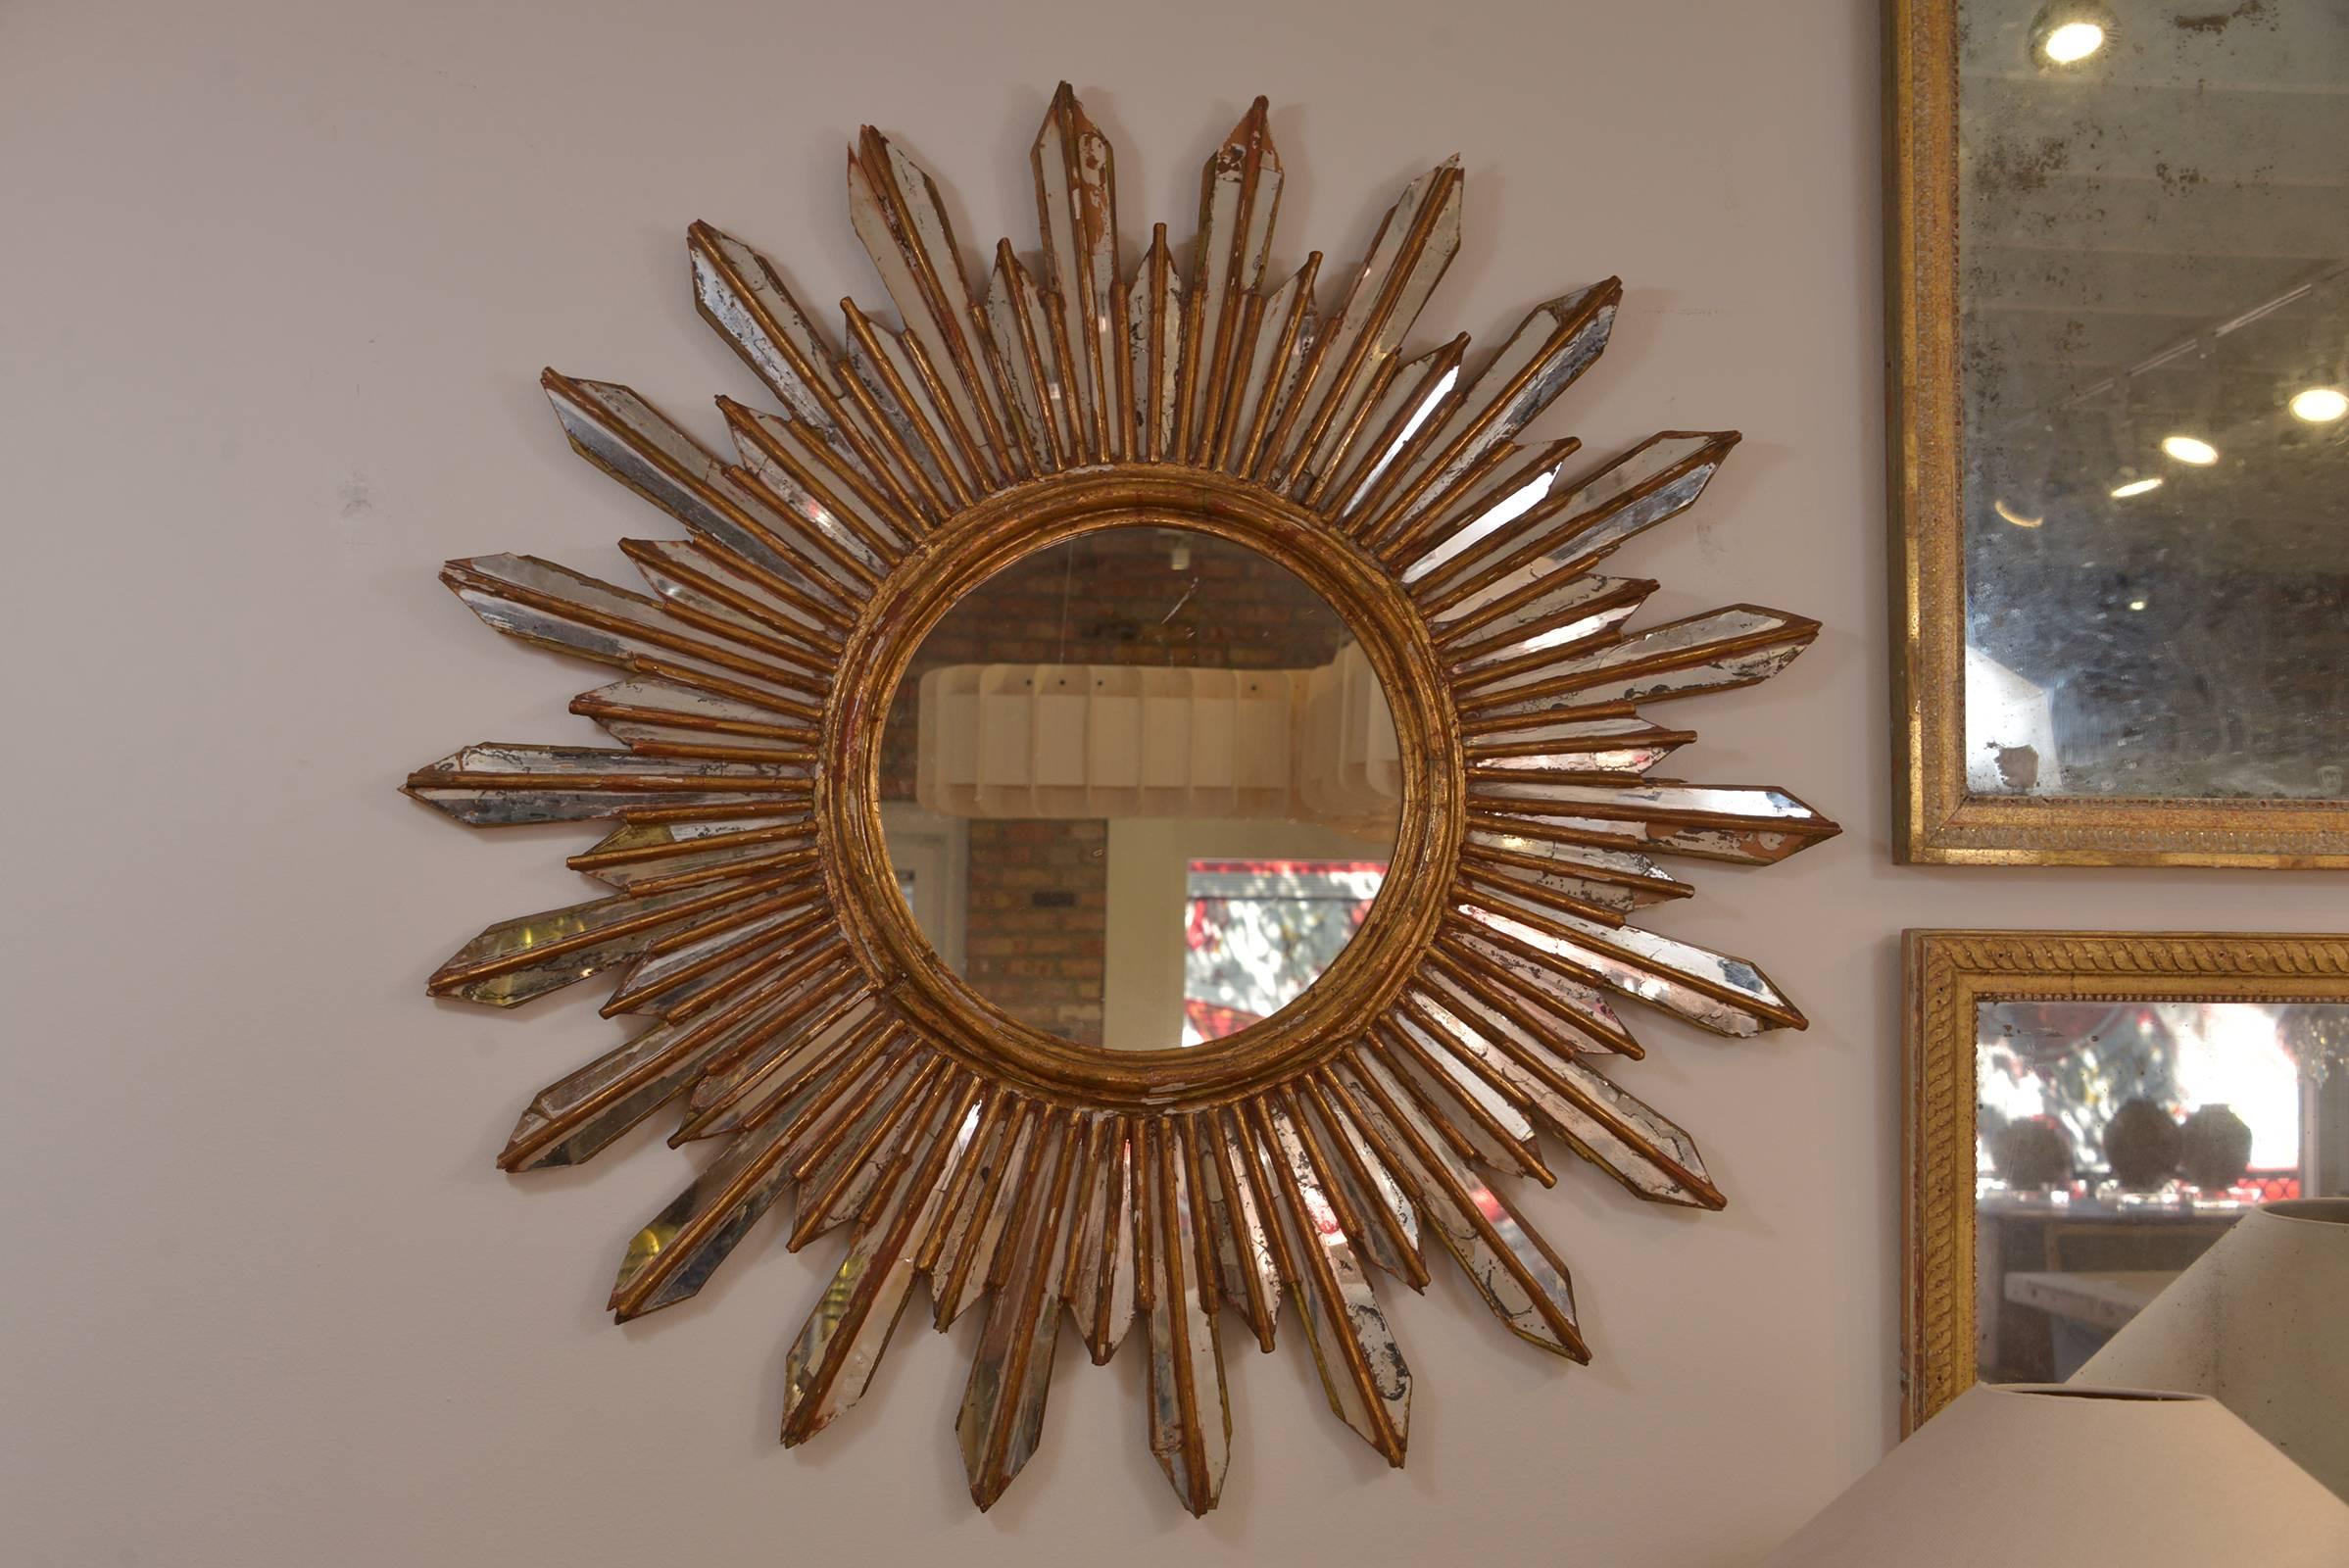 Very chic gilded Italian sunburst mirror from the 1940s.